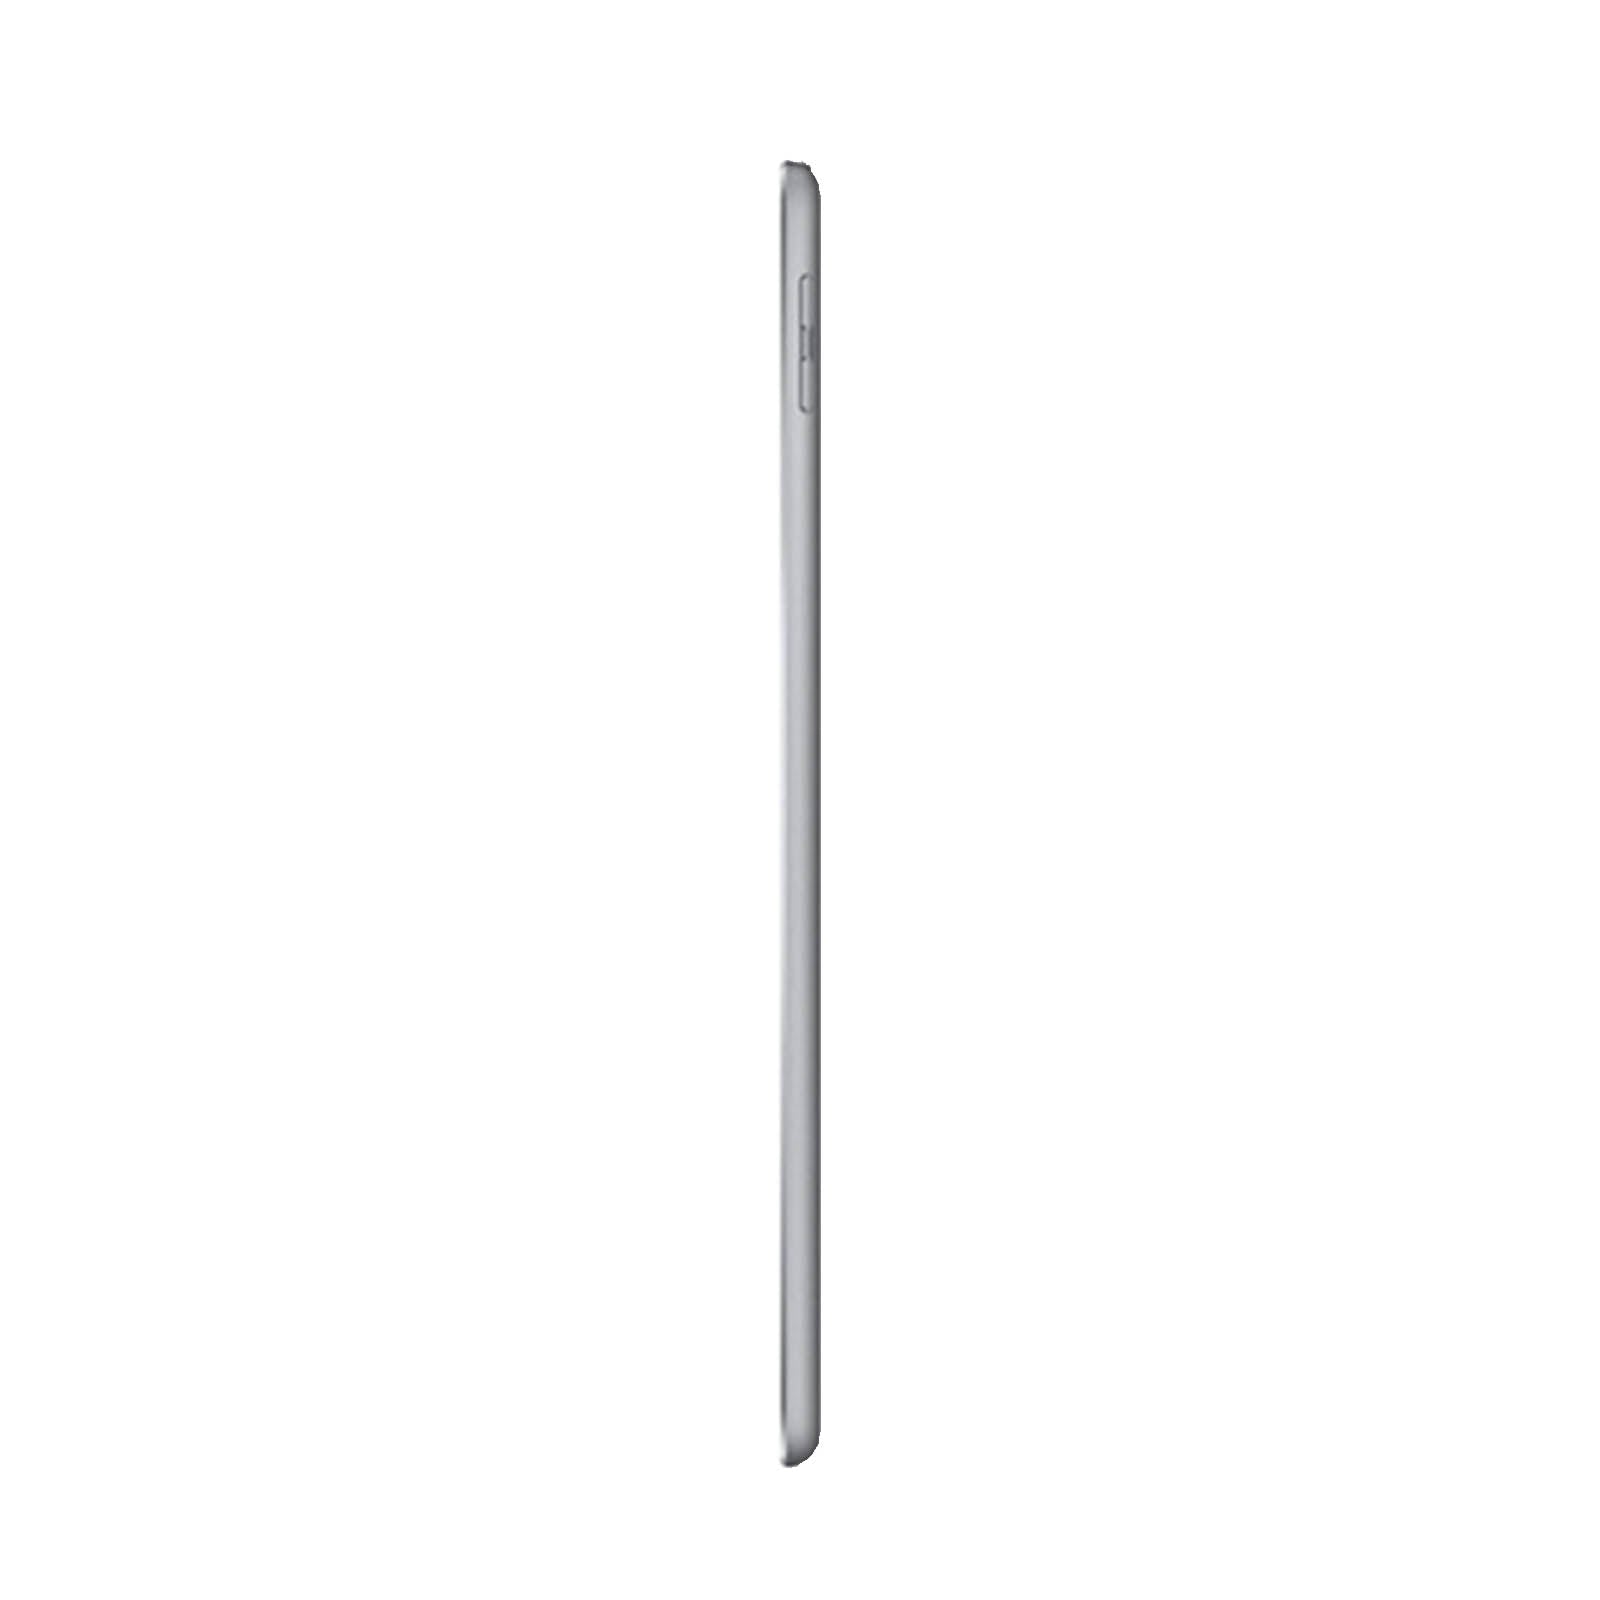 Apple iPad 5th Gen 9.7" 128GB Space Grey - Unlocked